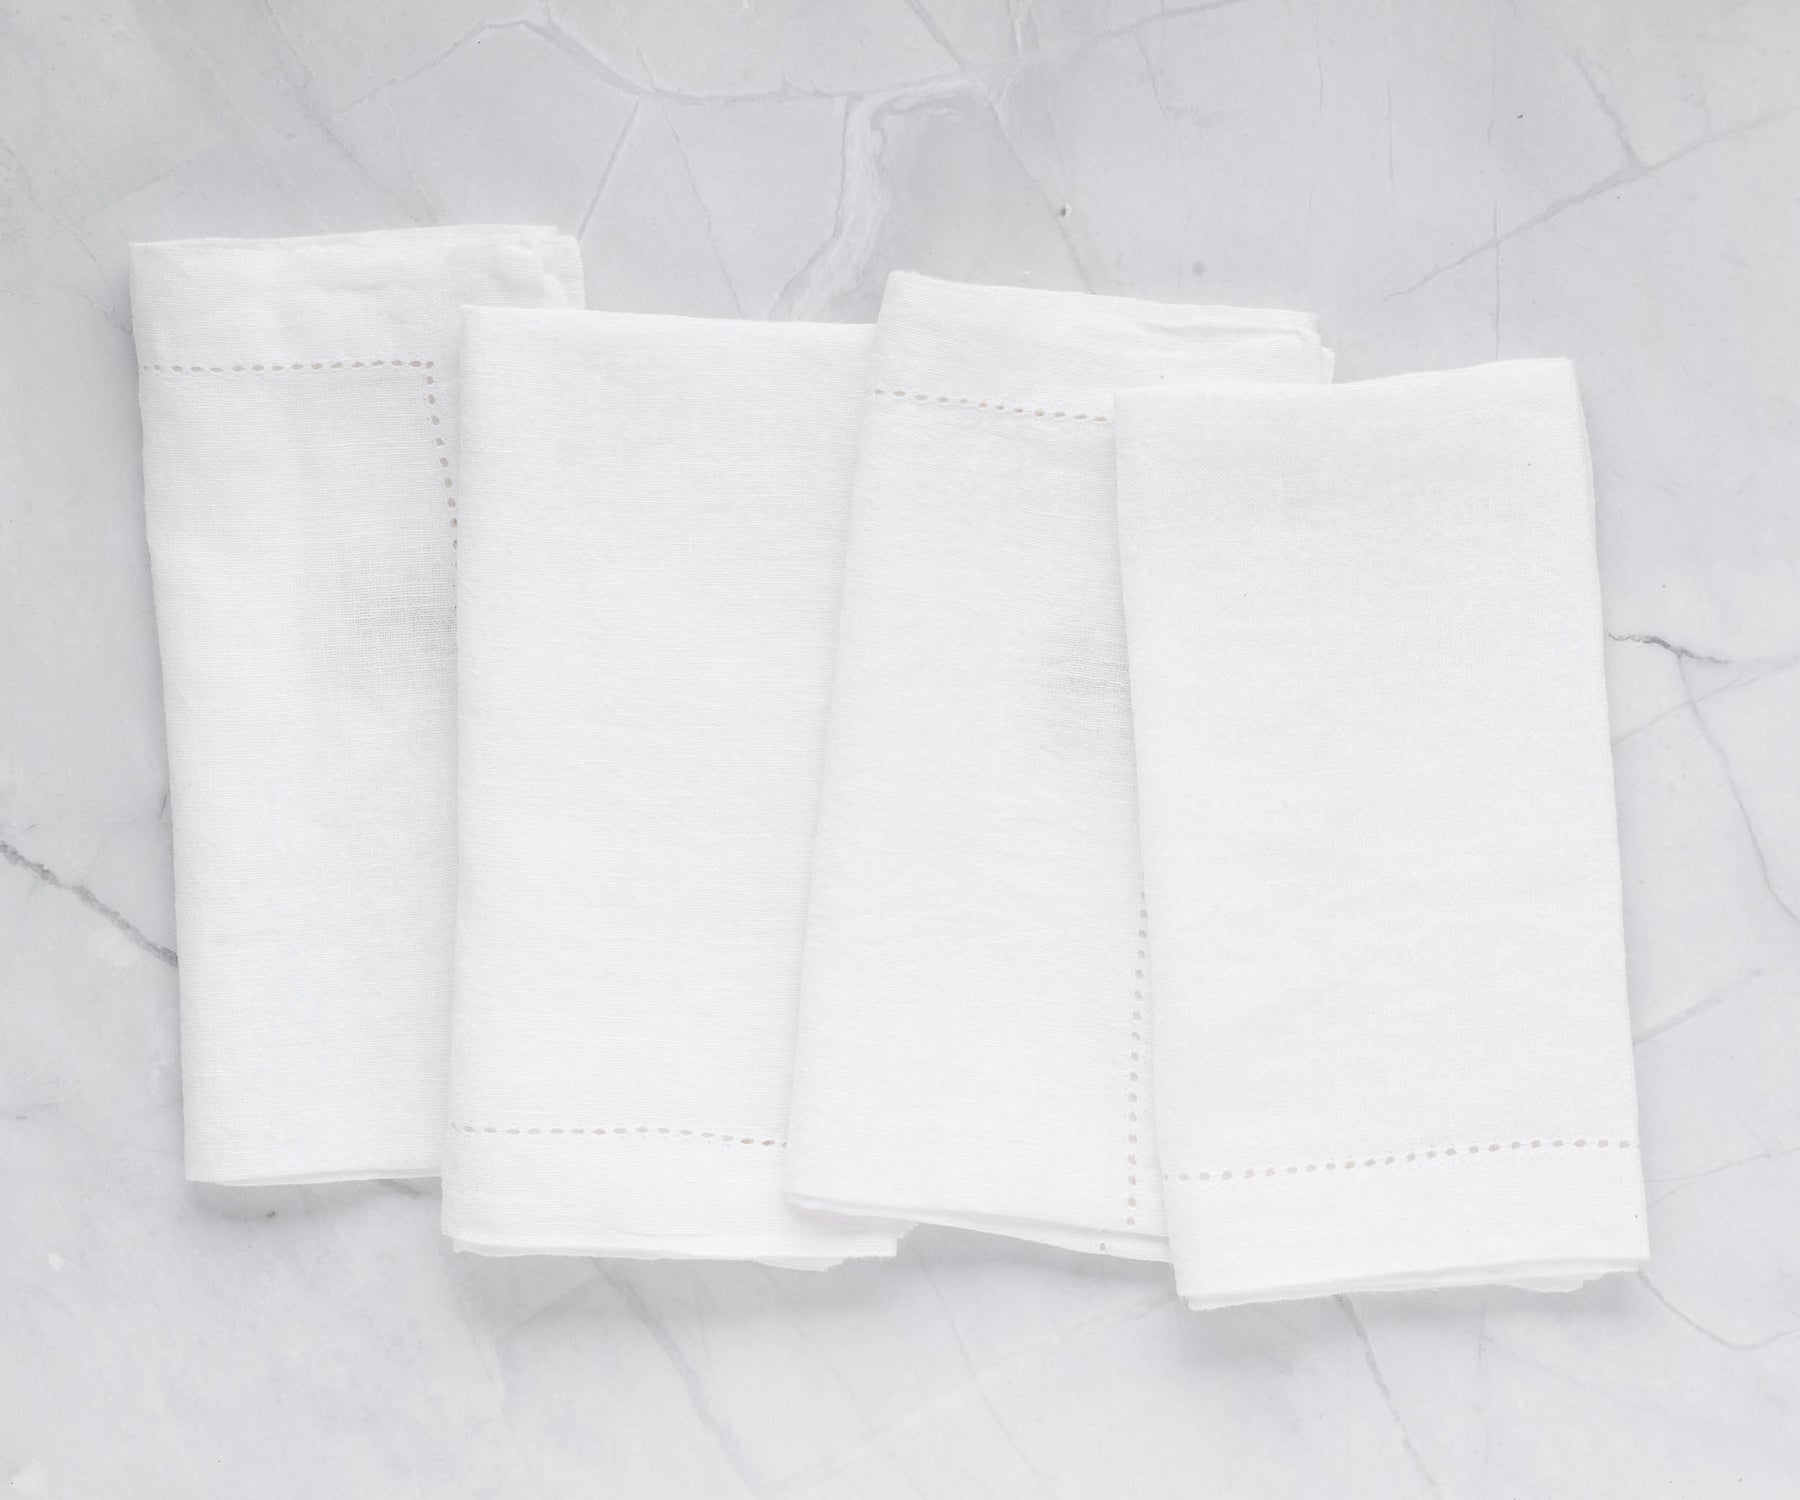 Group of four elegant white linen napkins on a marble background